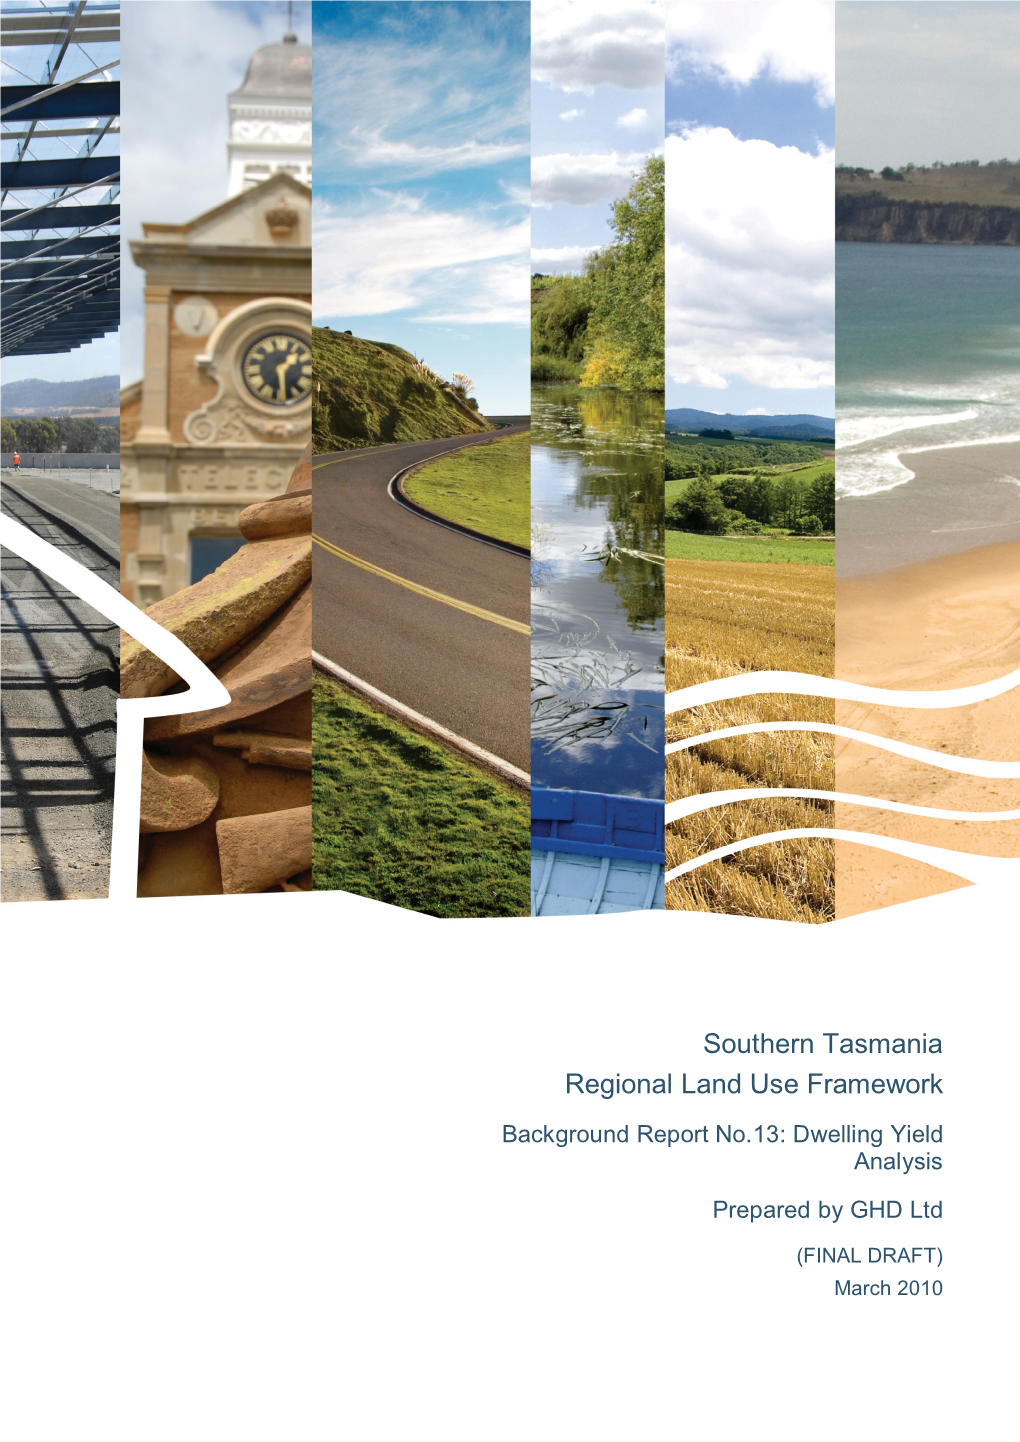 Southern Tasmania Regional Land Use Framework